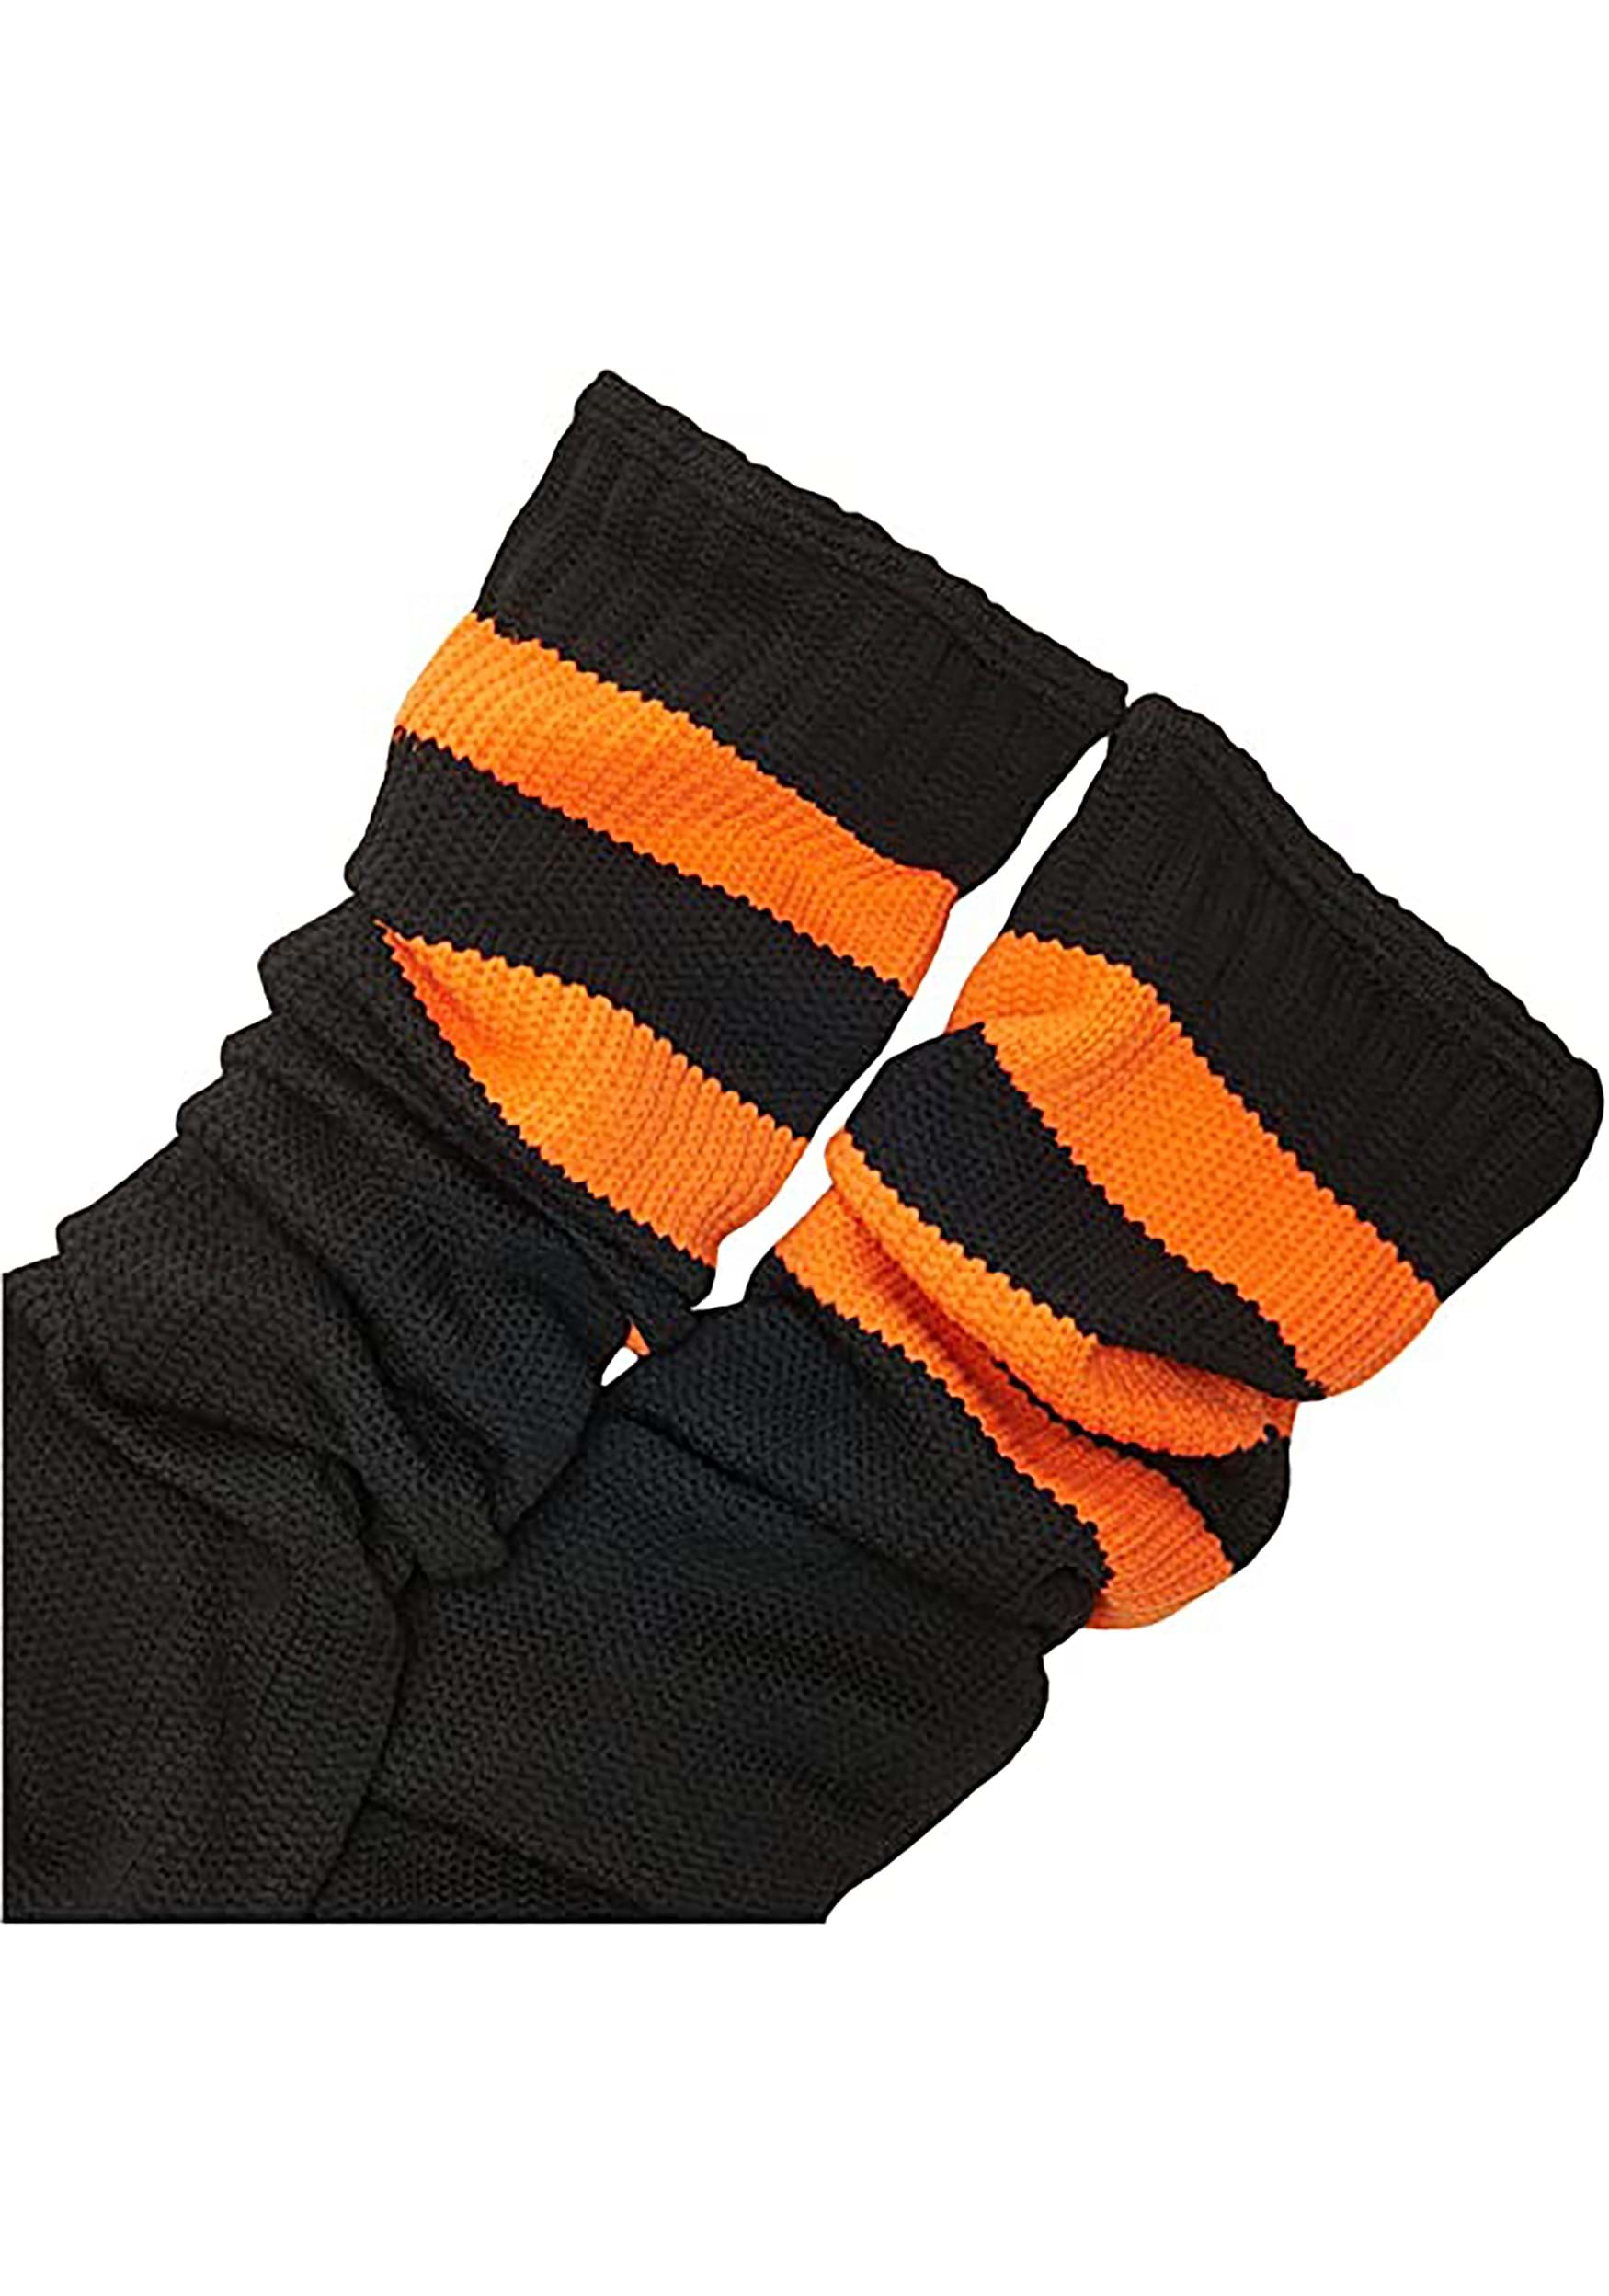 Women's Thigh High Athletic Black Socks With Orange Stripes Thigh Highs